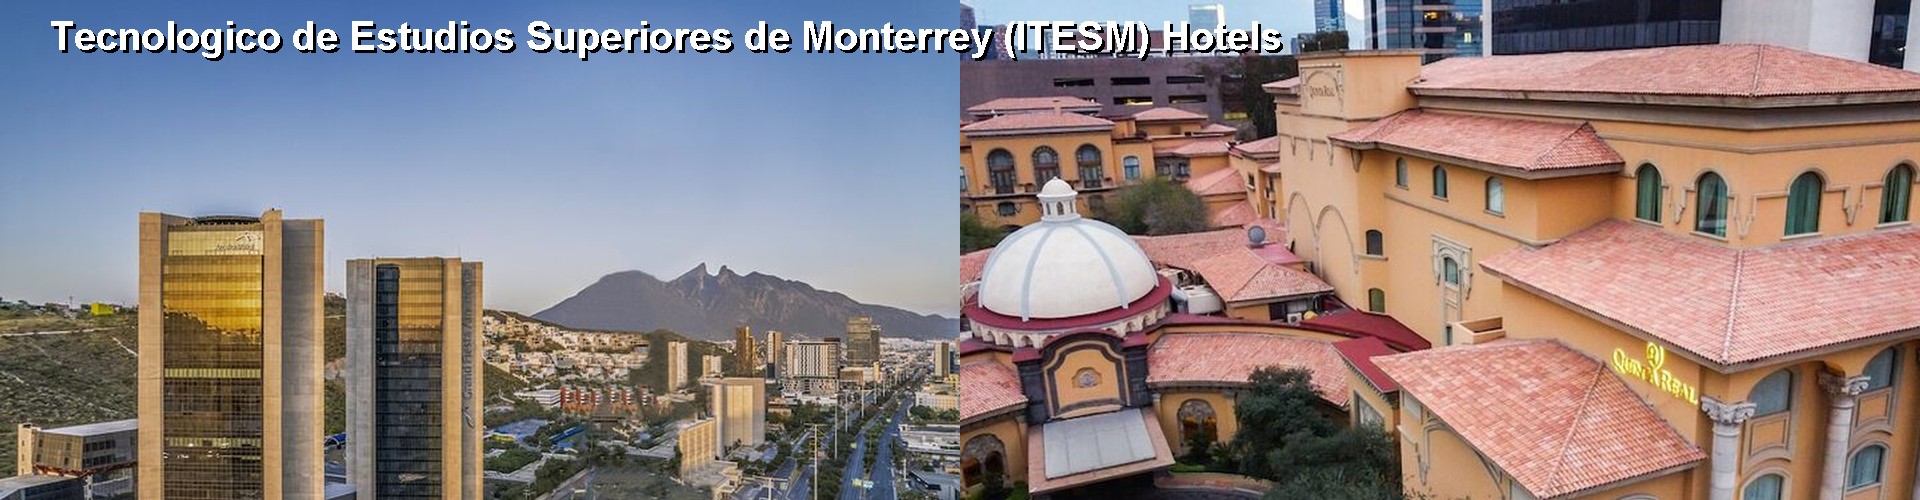 5 Best Hotels near Tecnologico de Estudios Superiores de Monterrey (ITESM)